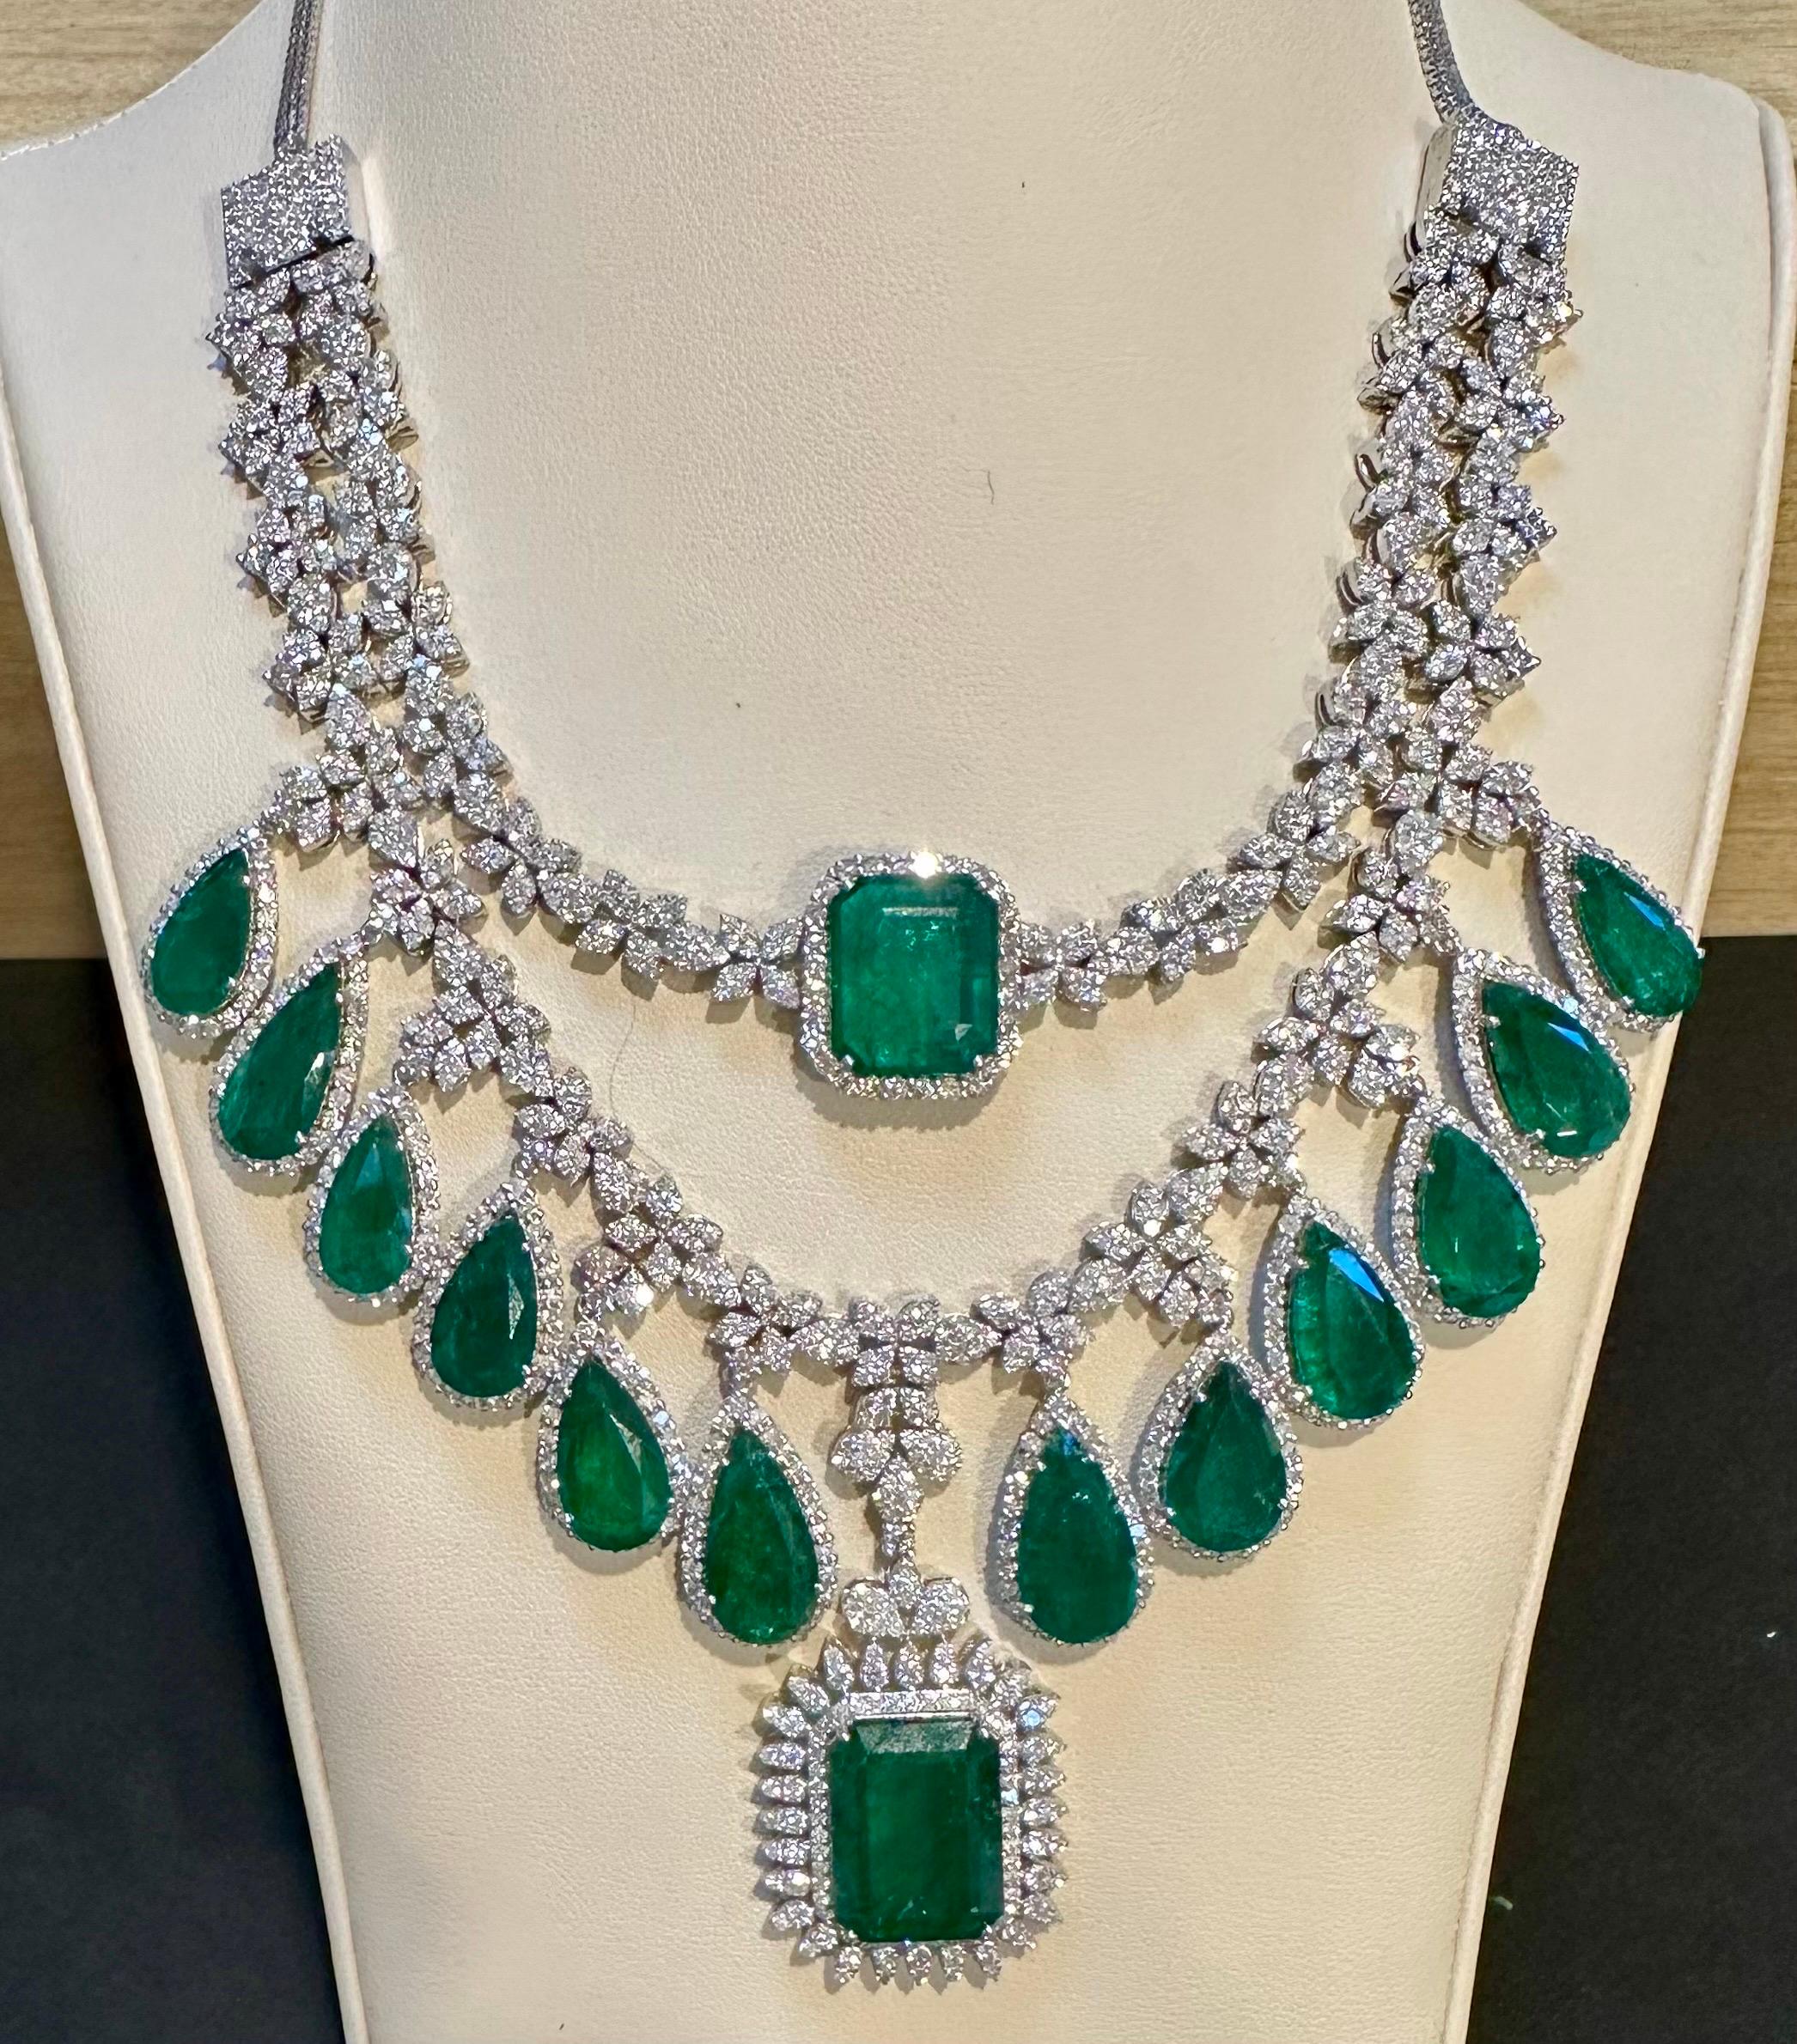 80 Ct solitaire Zambian Emerald & 25Ct Diamond Fringe Necklace detachable layers 6